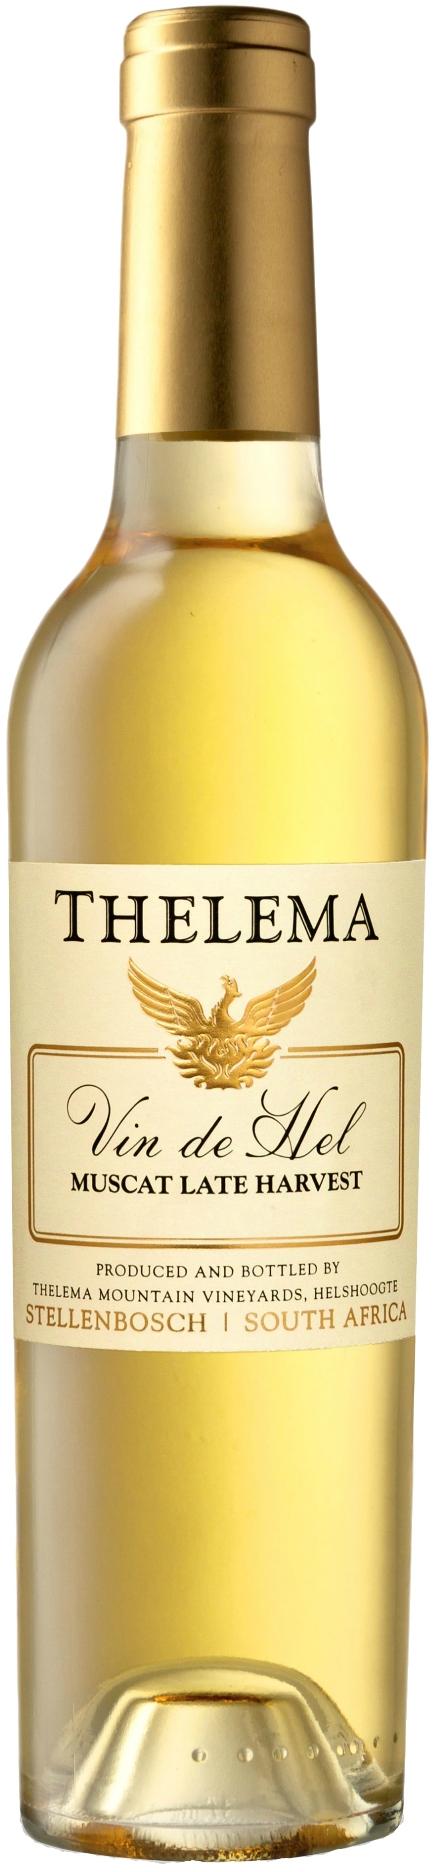 Thelema "Vin de Hel" Muscat late Harvest 2022